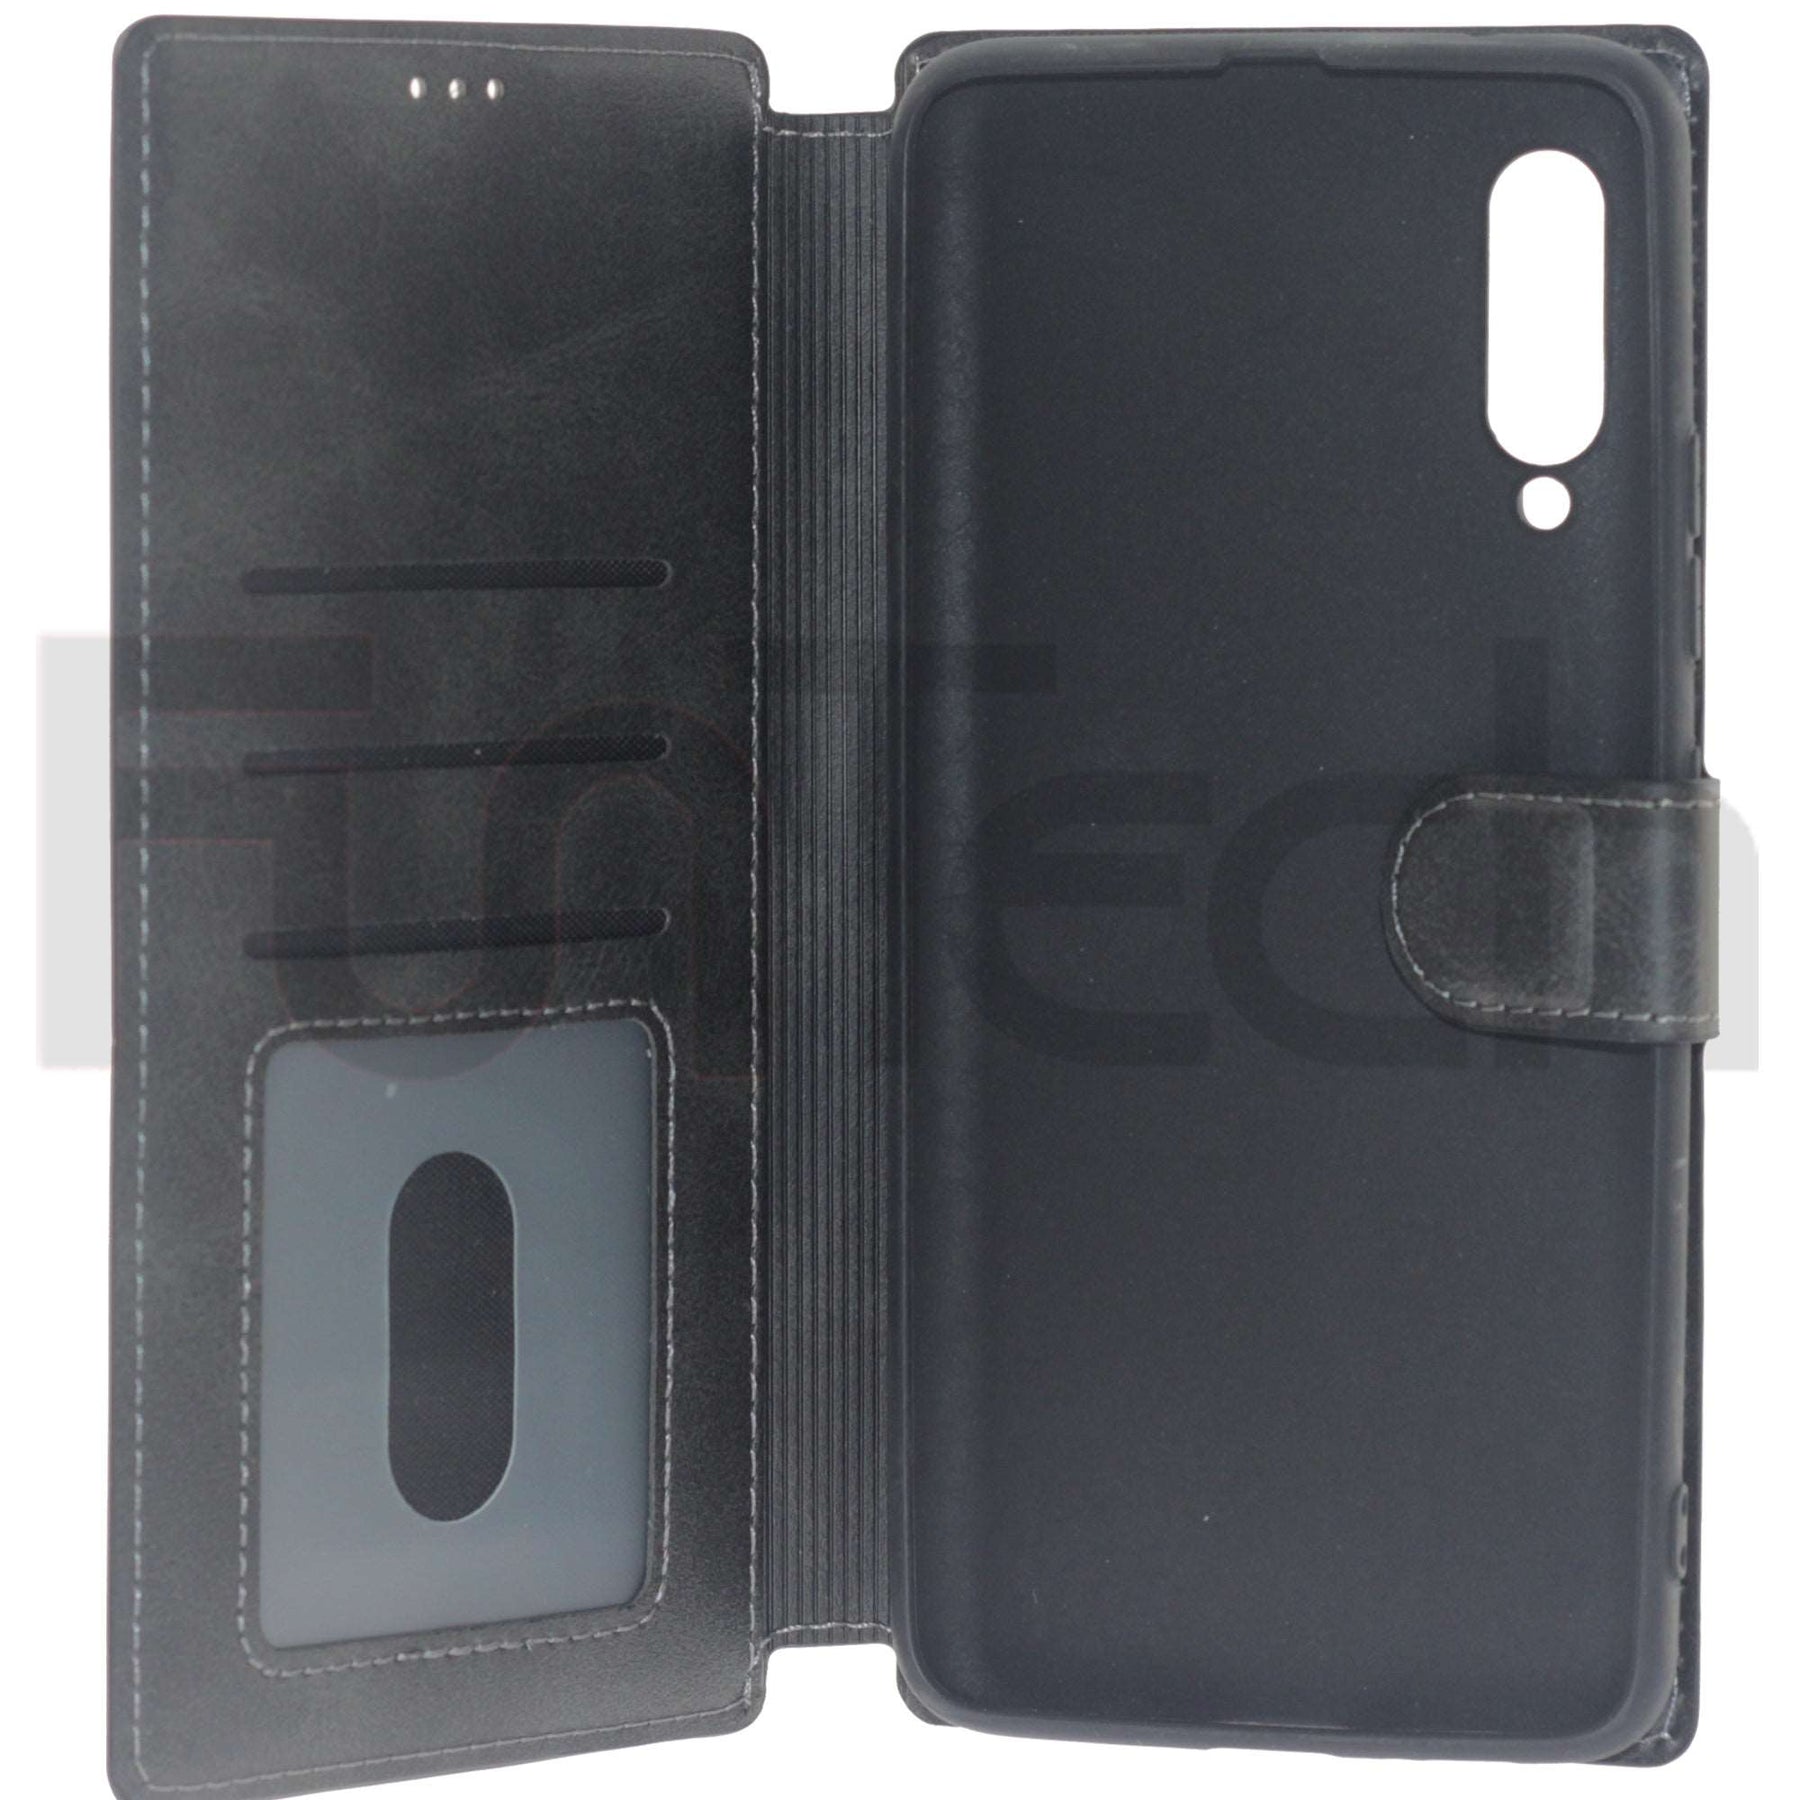 Samsung A90 5G, Leather Wallet Case, Color Black.